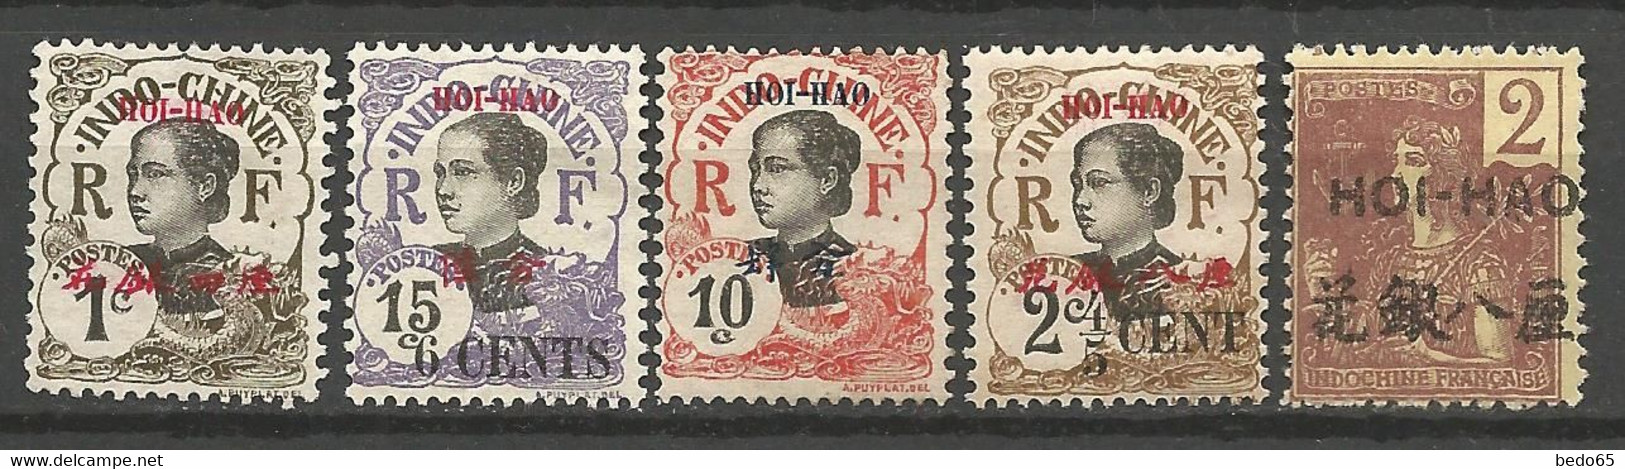 LOT HOI-HAO   NEUF SANS GOM - Unused Stamps